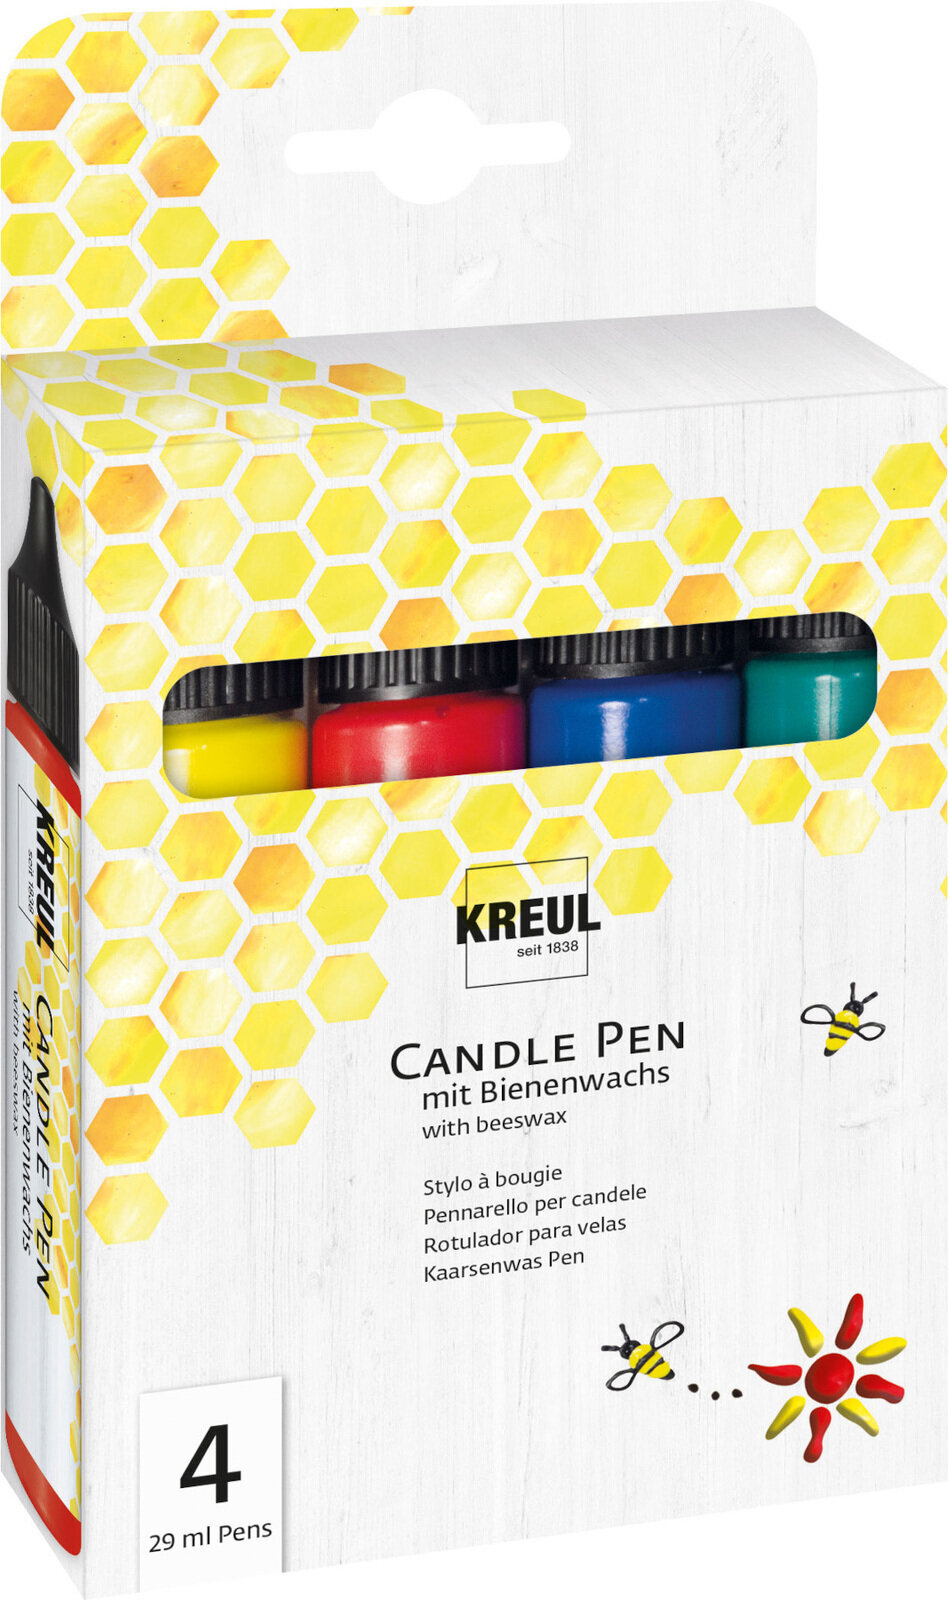 Flomaster Kreul Candle Pen Set